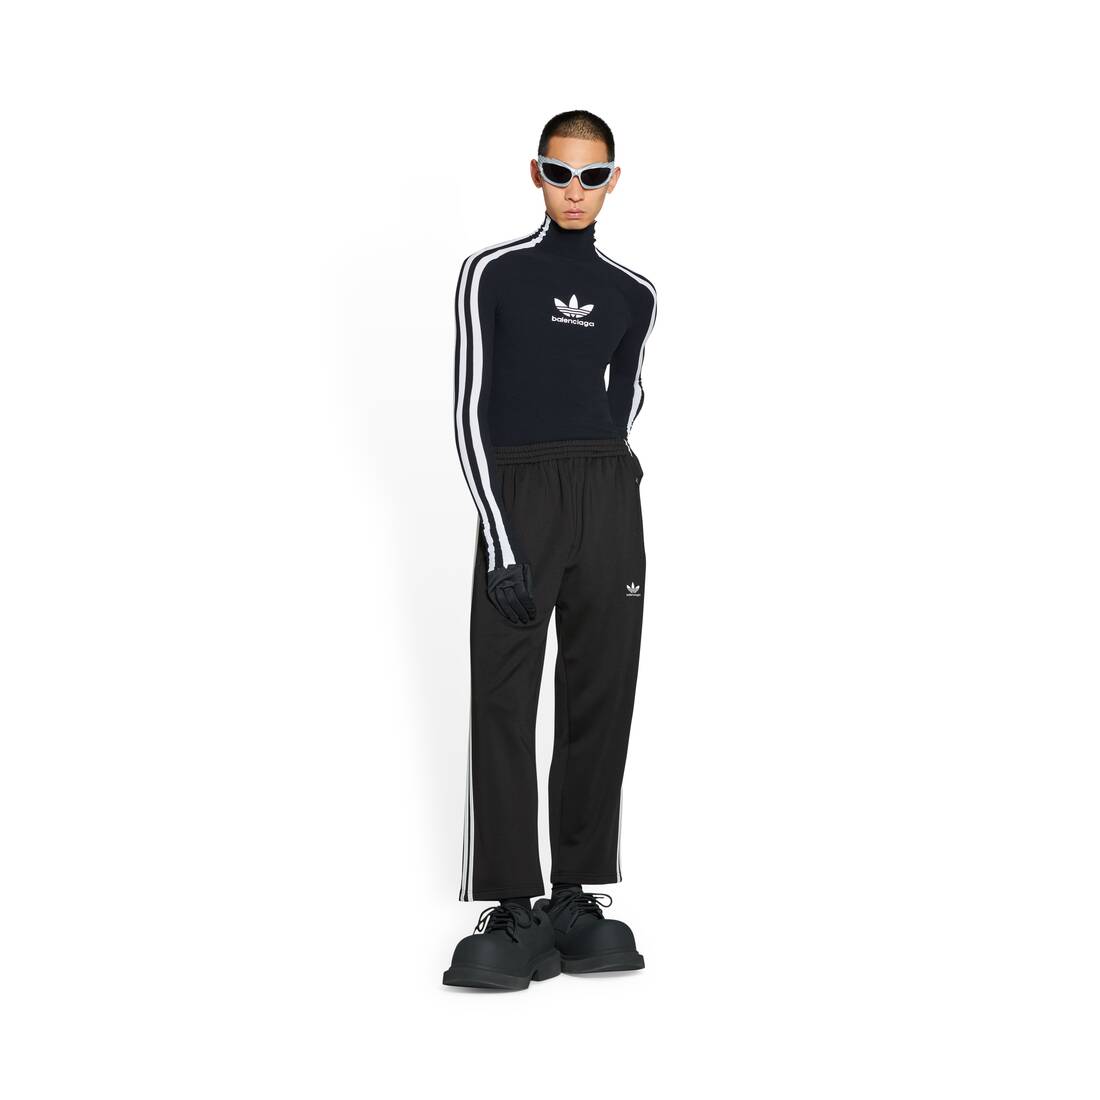 Definitie Intact antwoord Men's Balenciaga / Adidas Cropped Sweatpants in Black | Balenciaga US